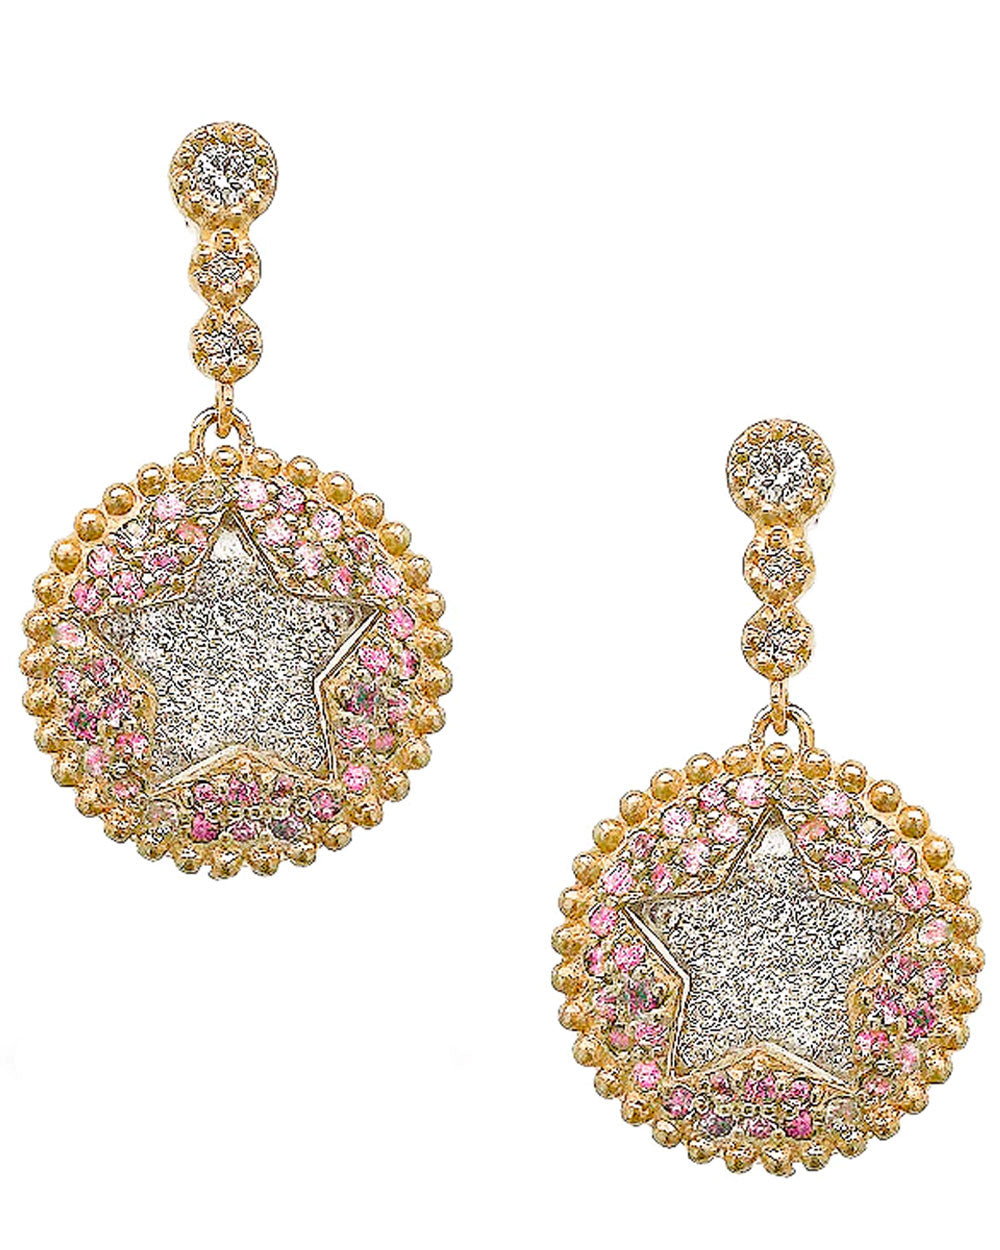 The Crystal Pink Star Drop Earrings